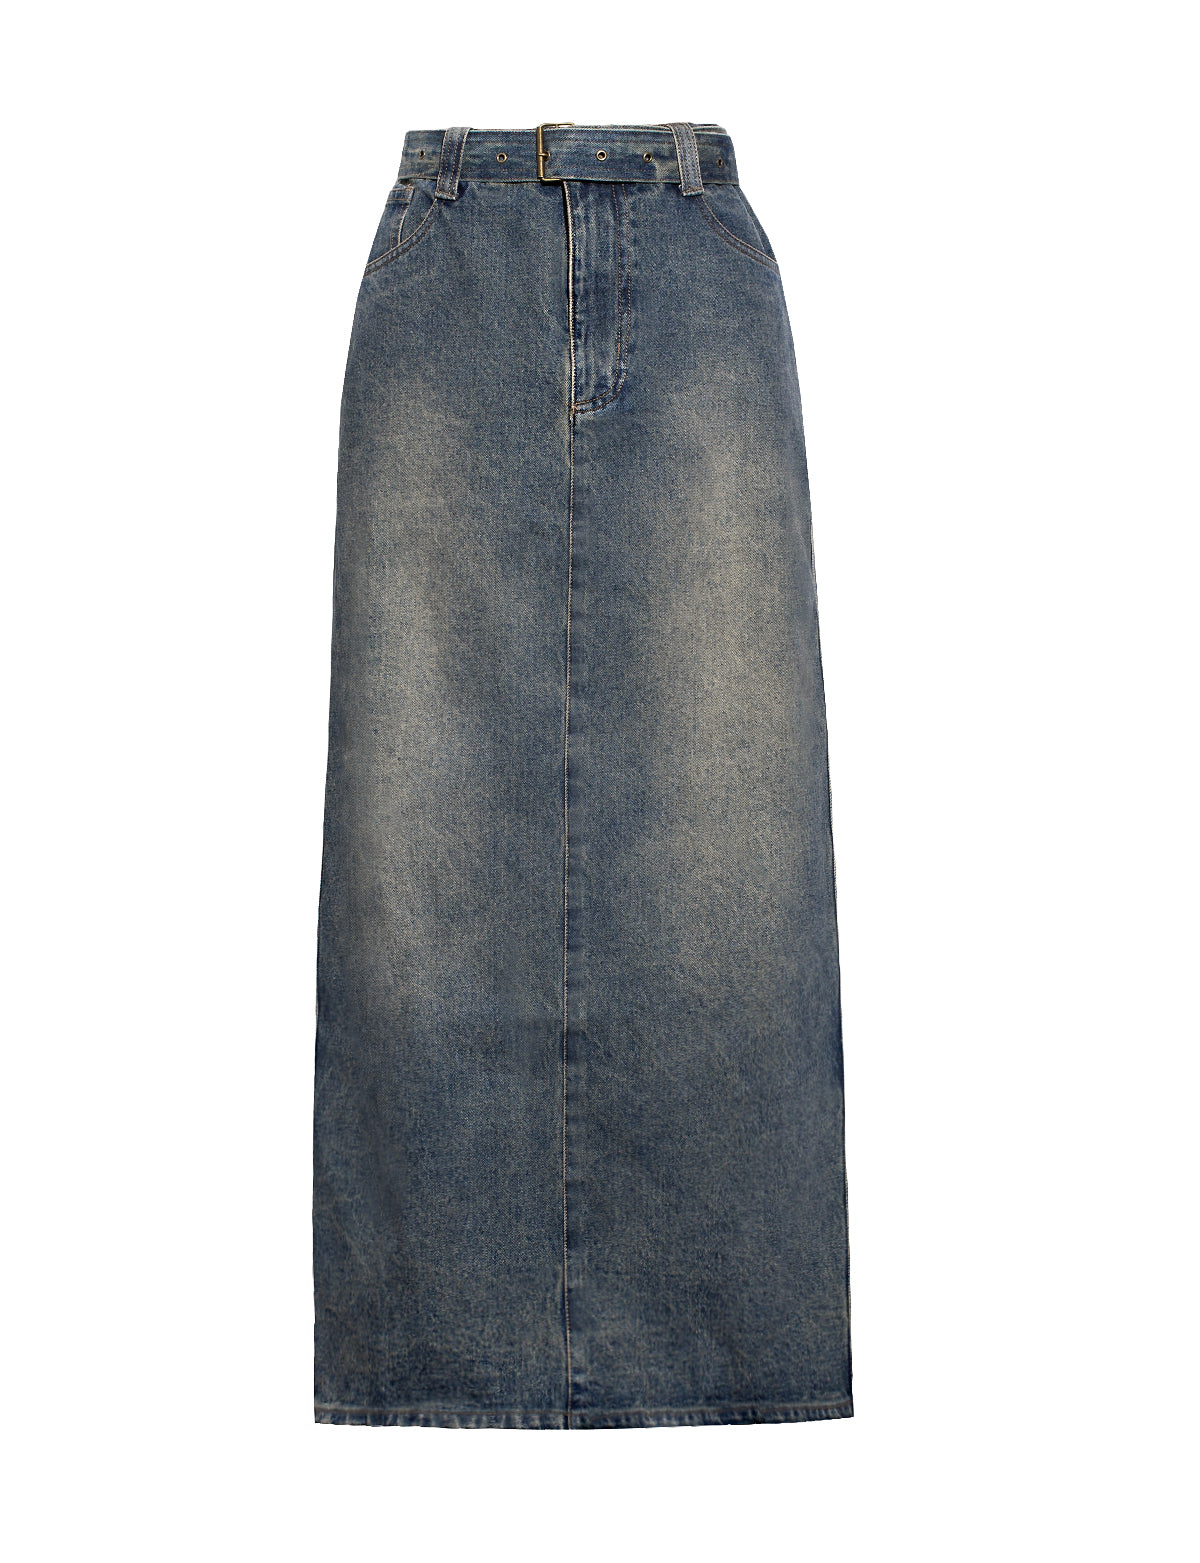 Dirty Denim Belted Maxi Skirt -BESTSELLER